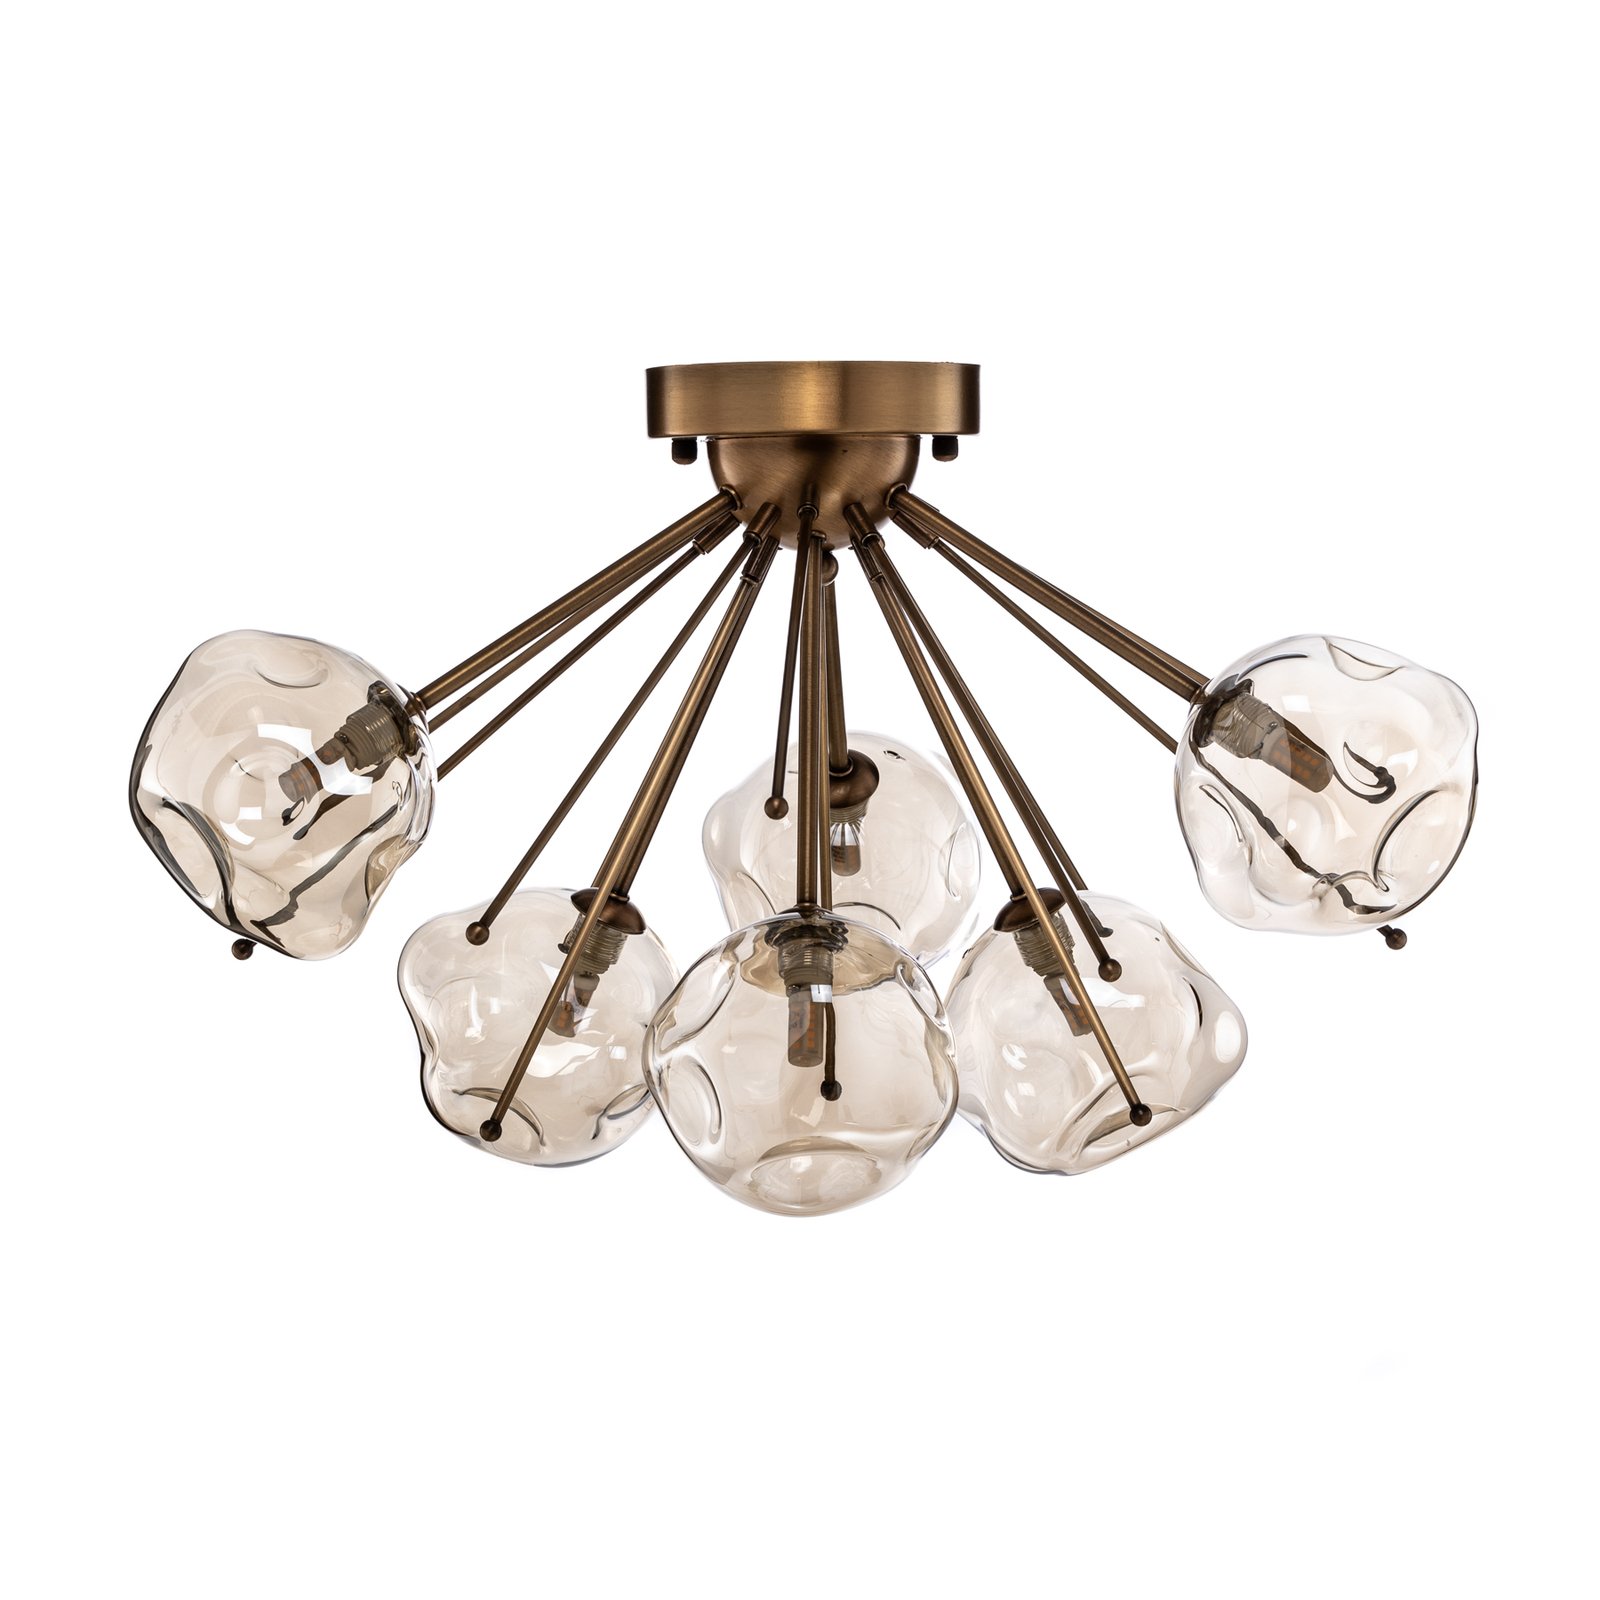 AR-1777-6E ceiling light 6 lampshades antique gold